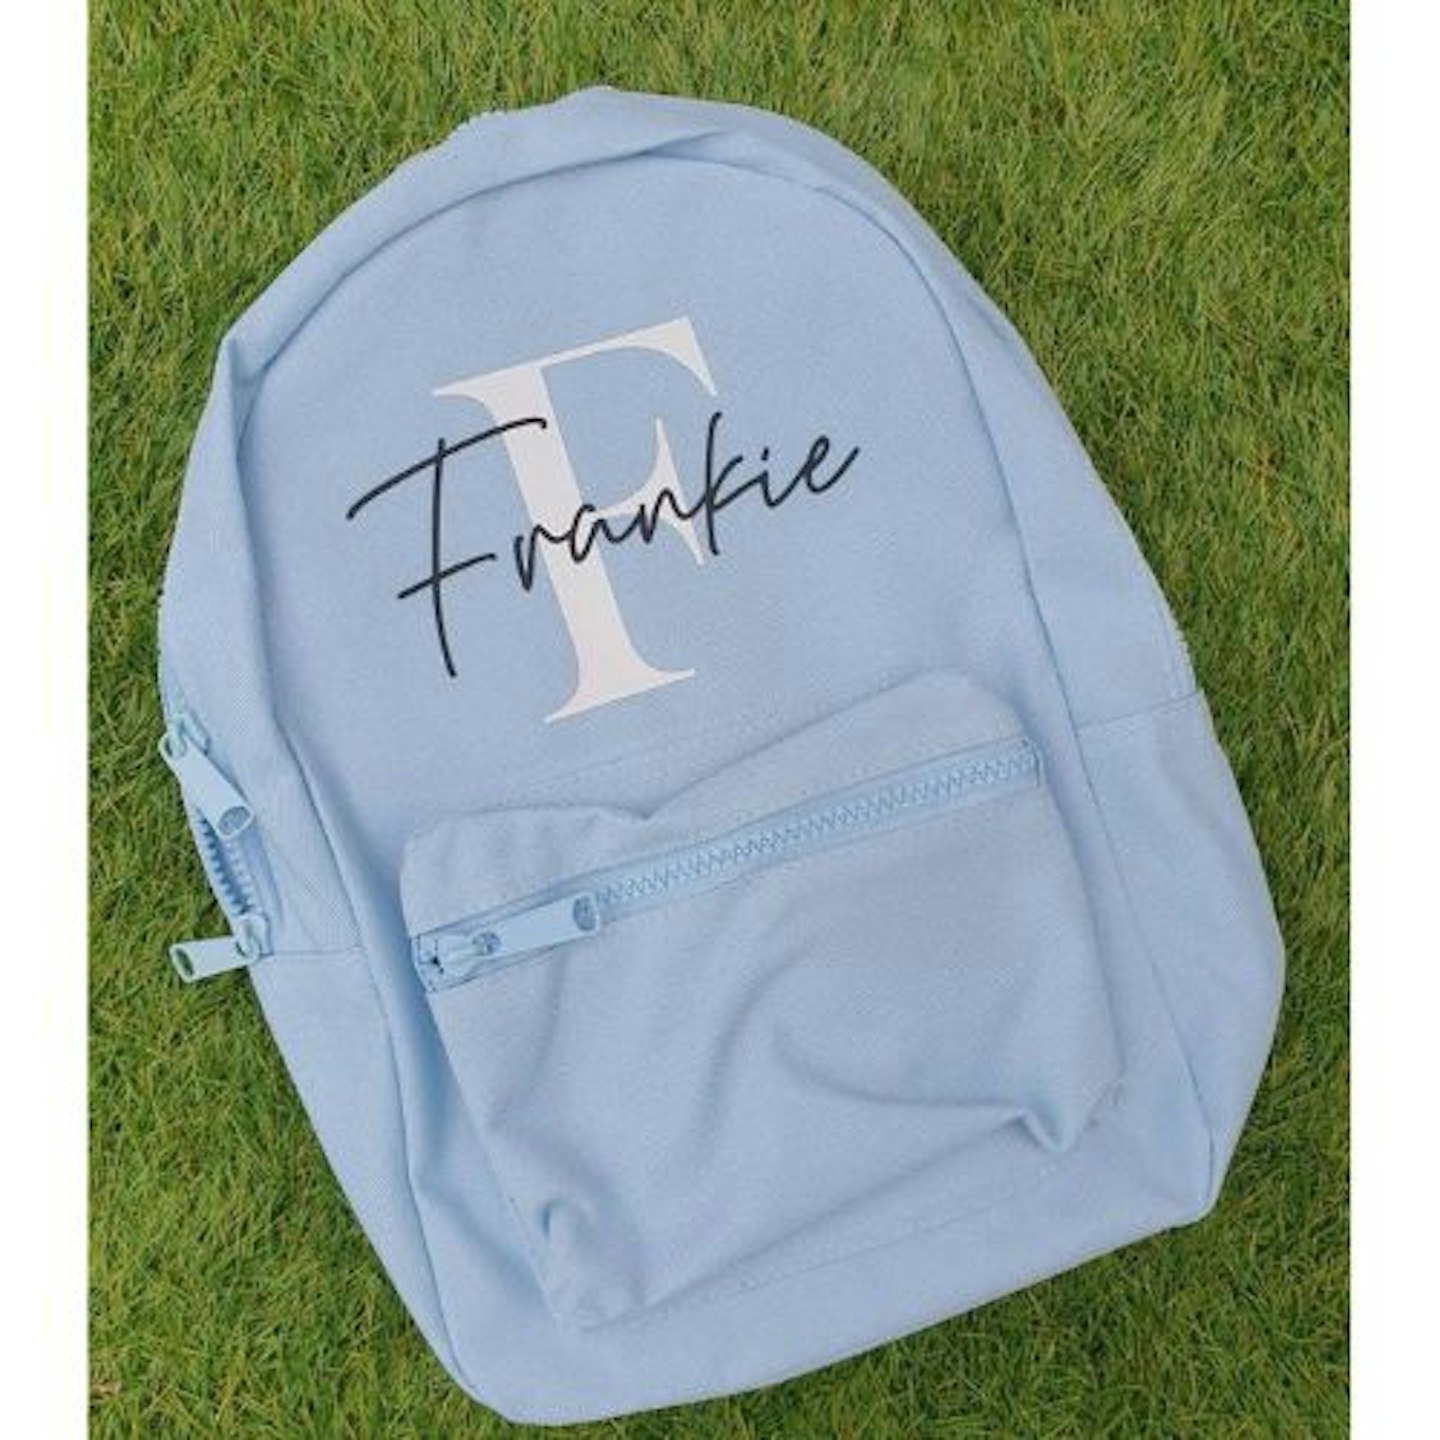 Personalised backpack school bag with name